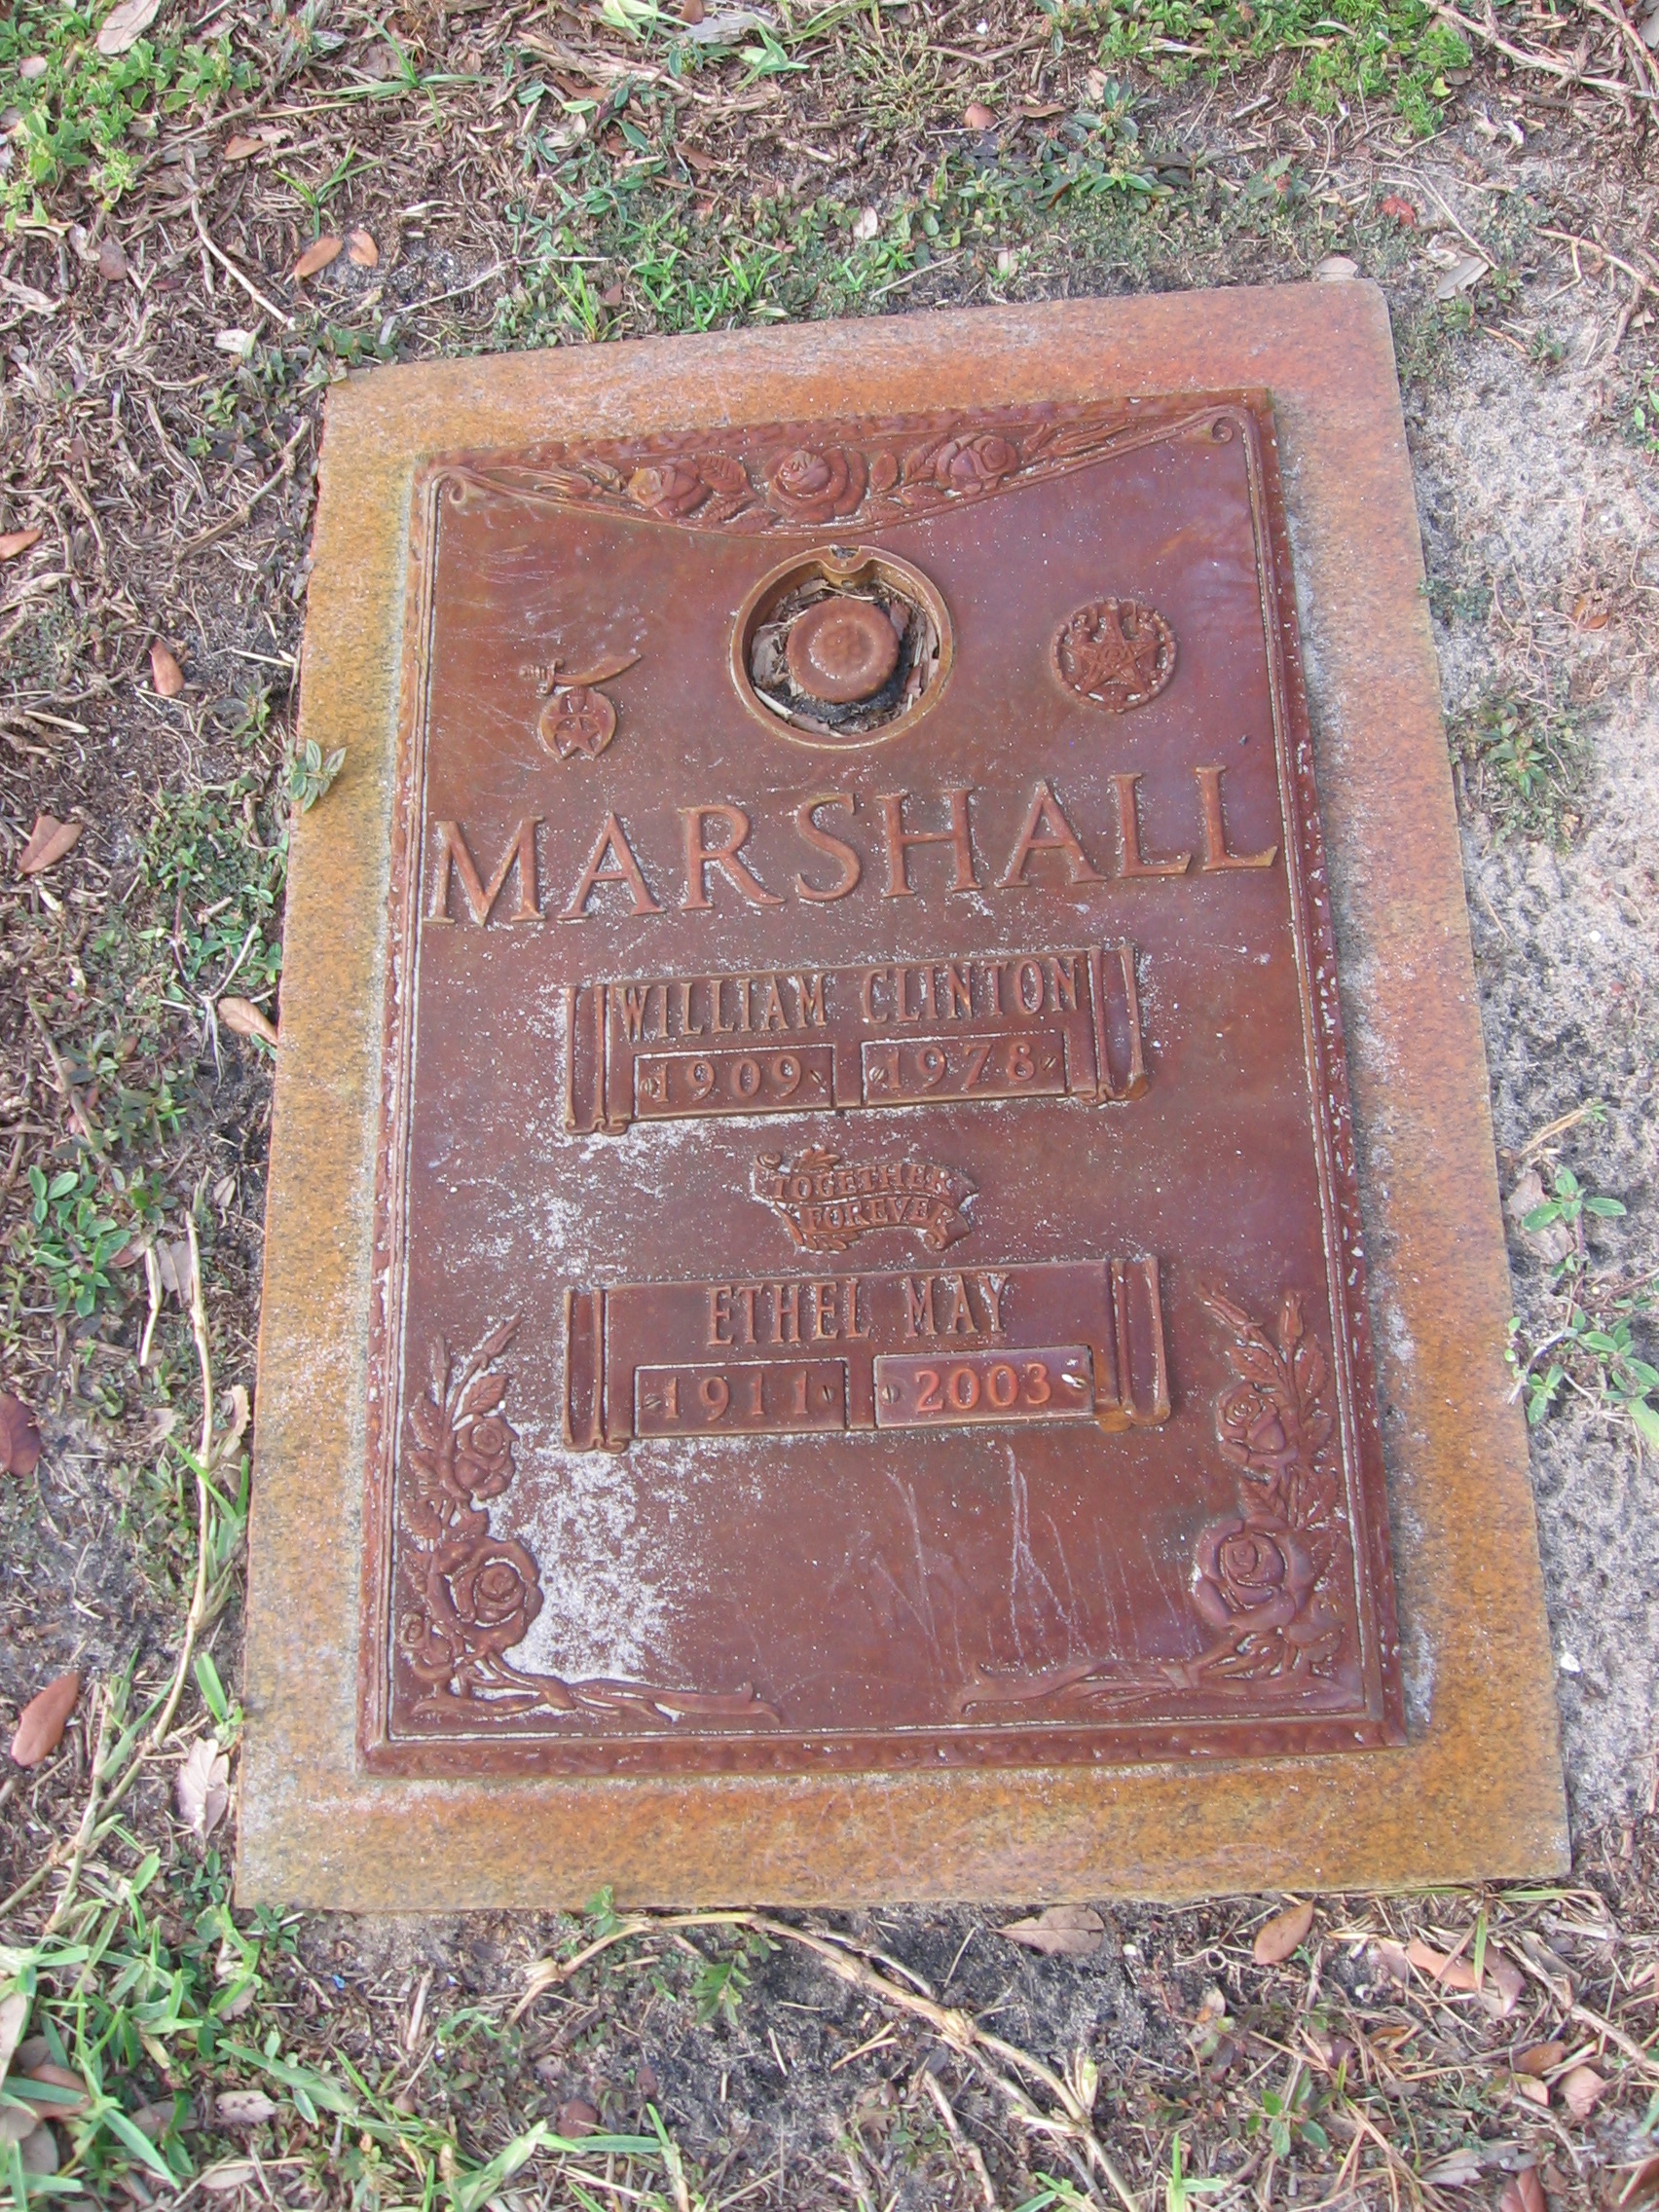 Ethel May Marshall